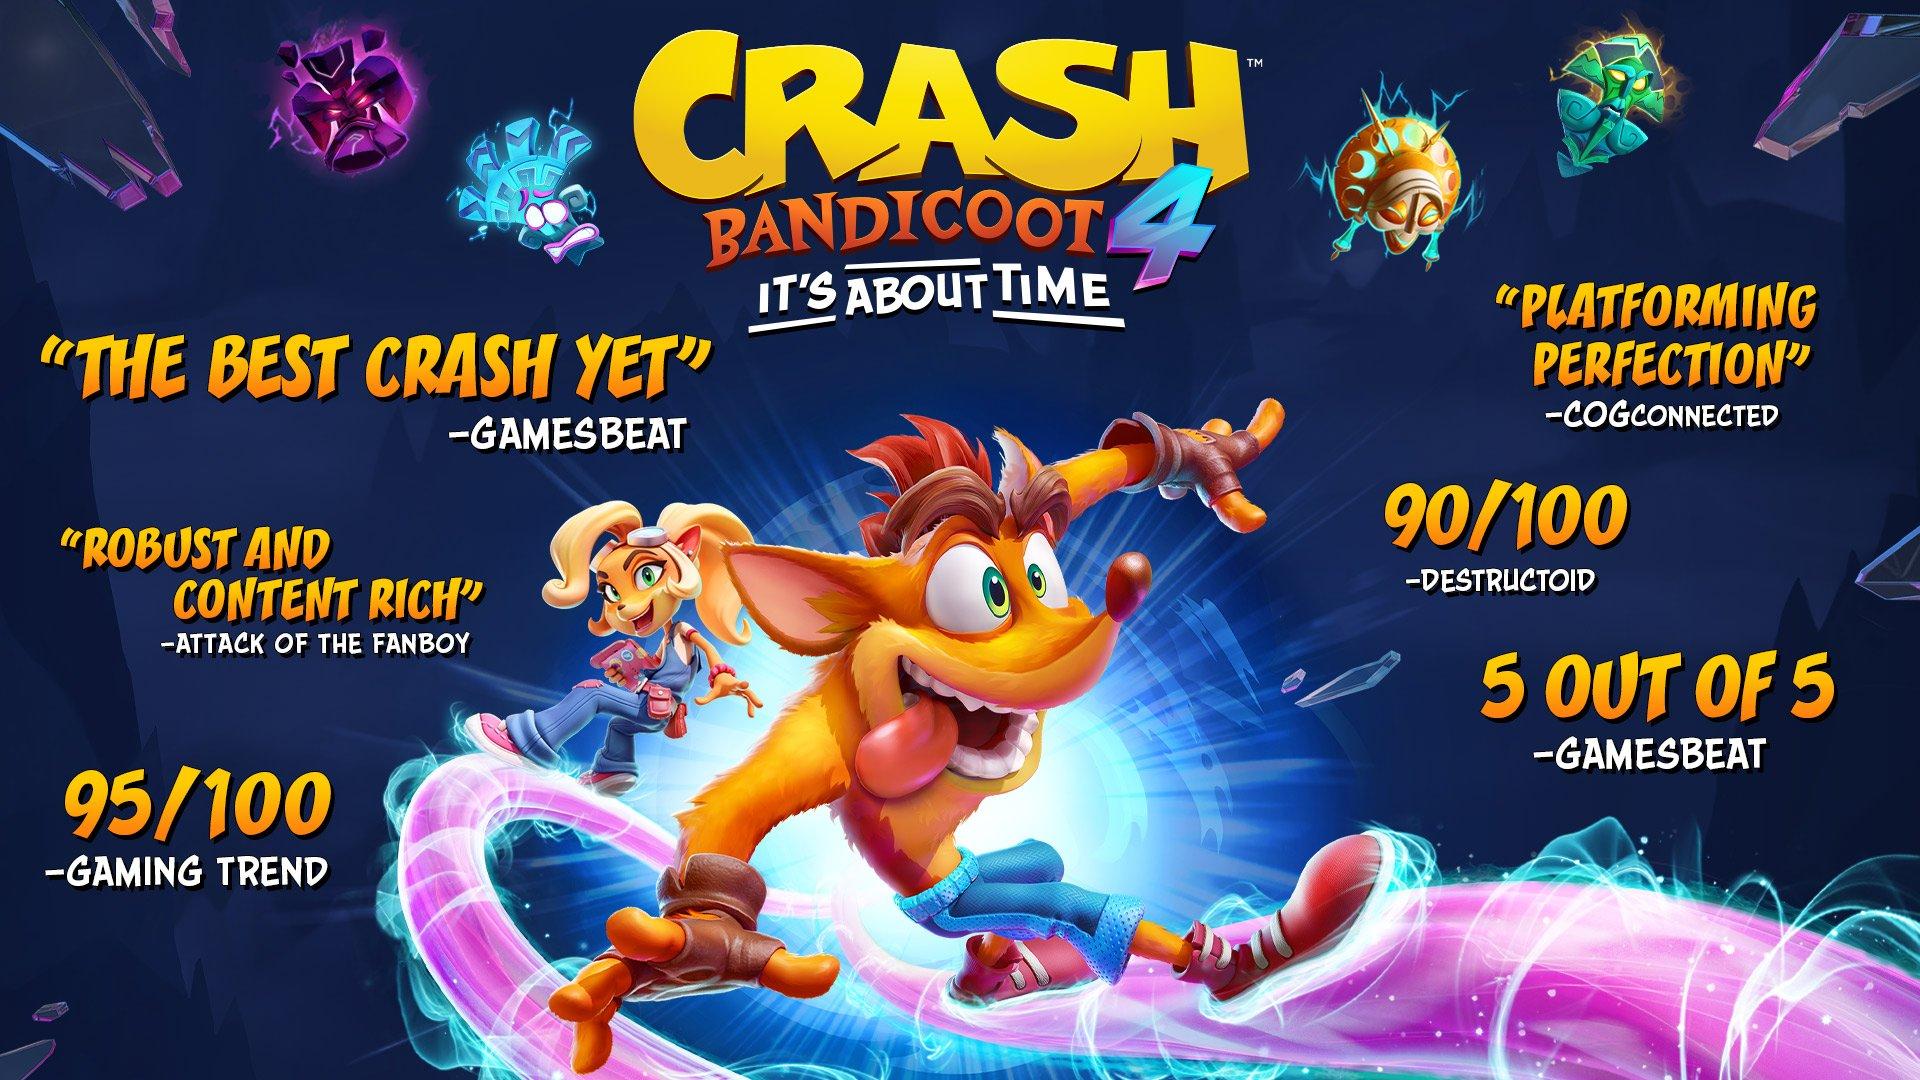 Walkthrough - Crash Bandicoot Guide - IGN